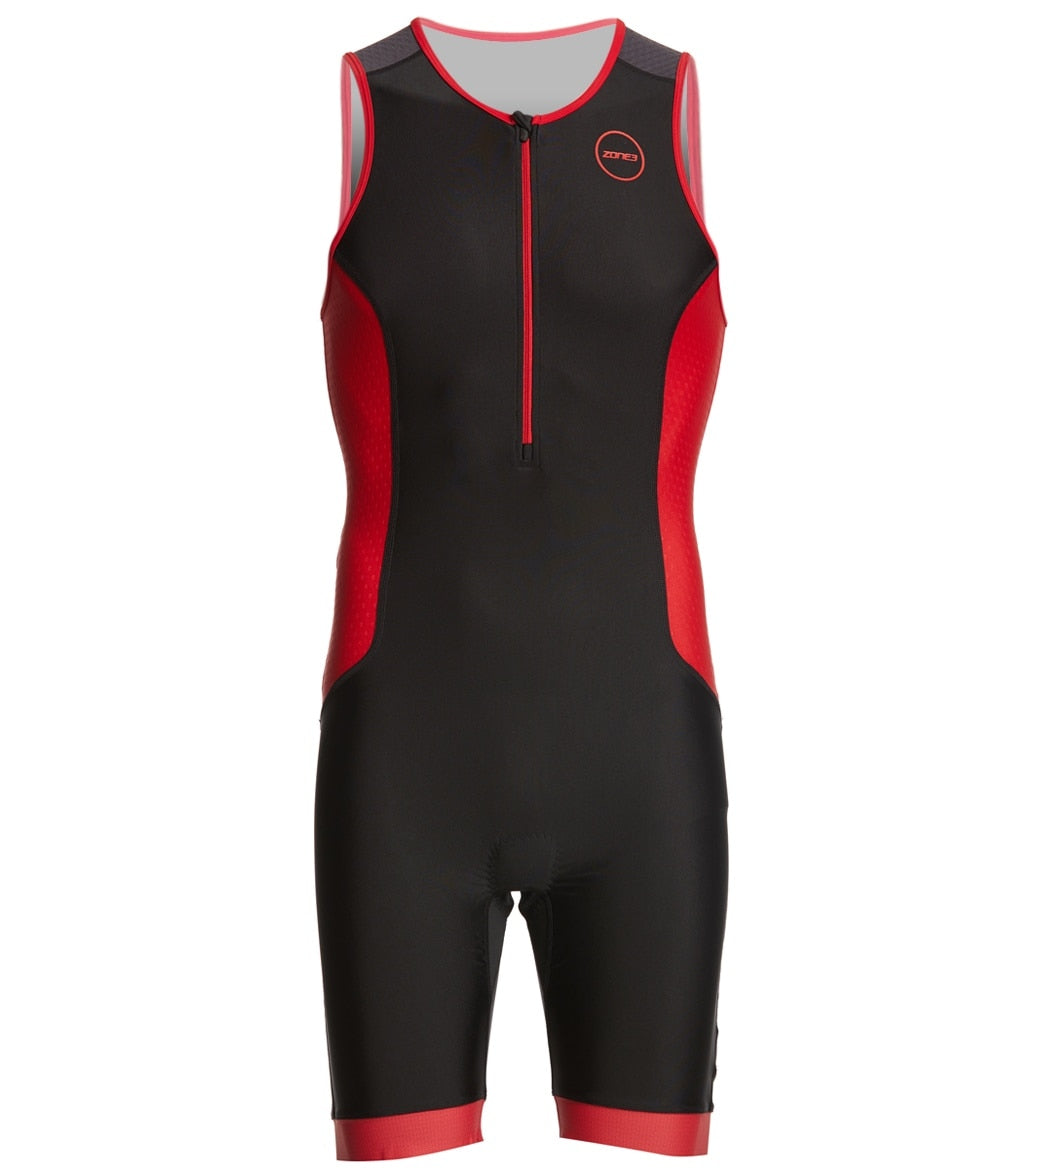 Zone3 Men's Aquaflo Plus Trisuit - Black/Grey/Red Xxl - Swimoutlet.com